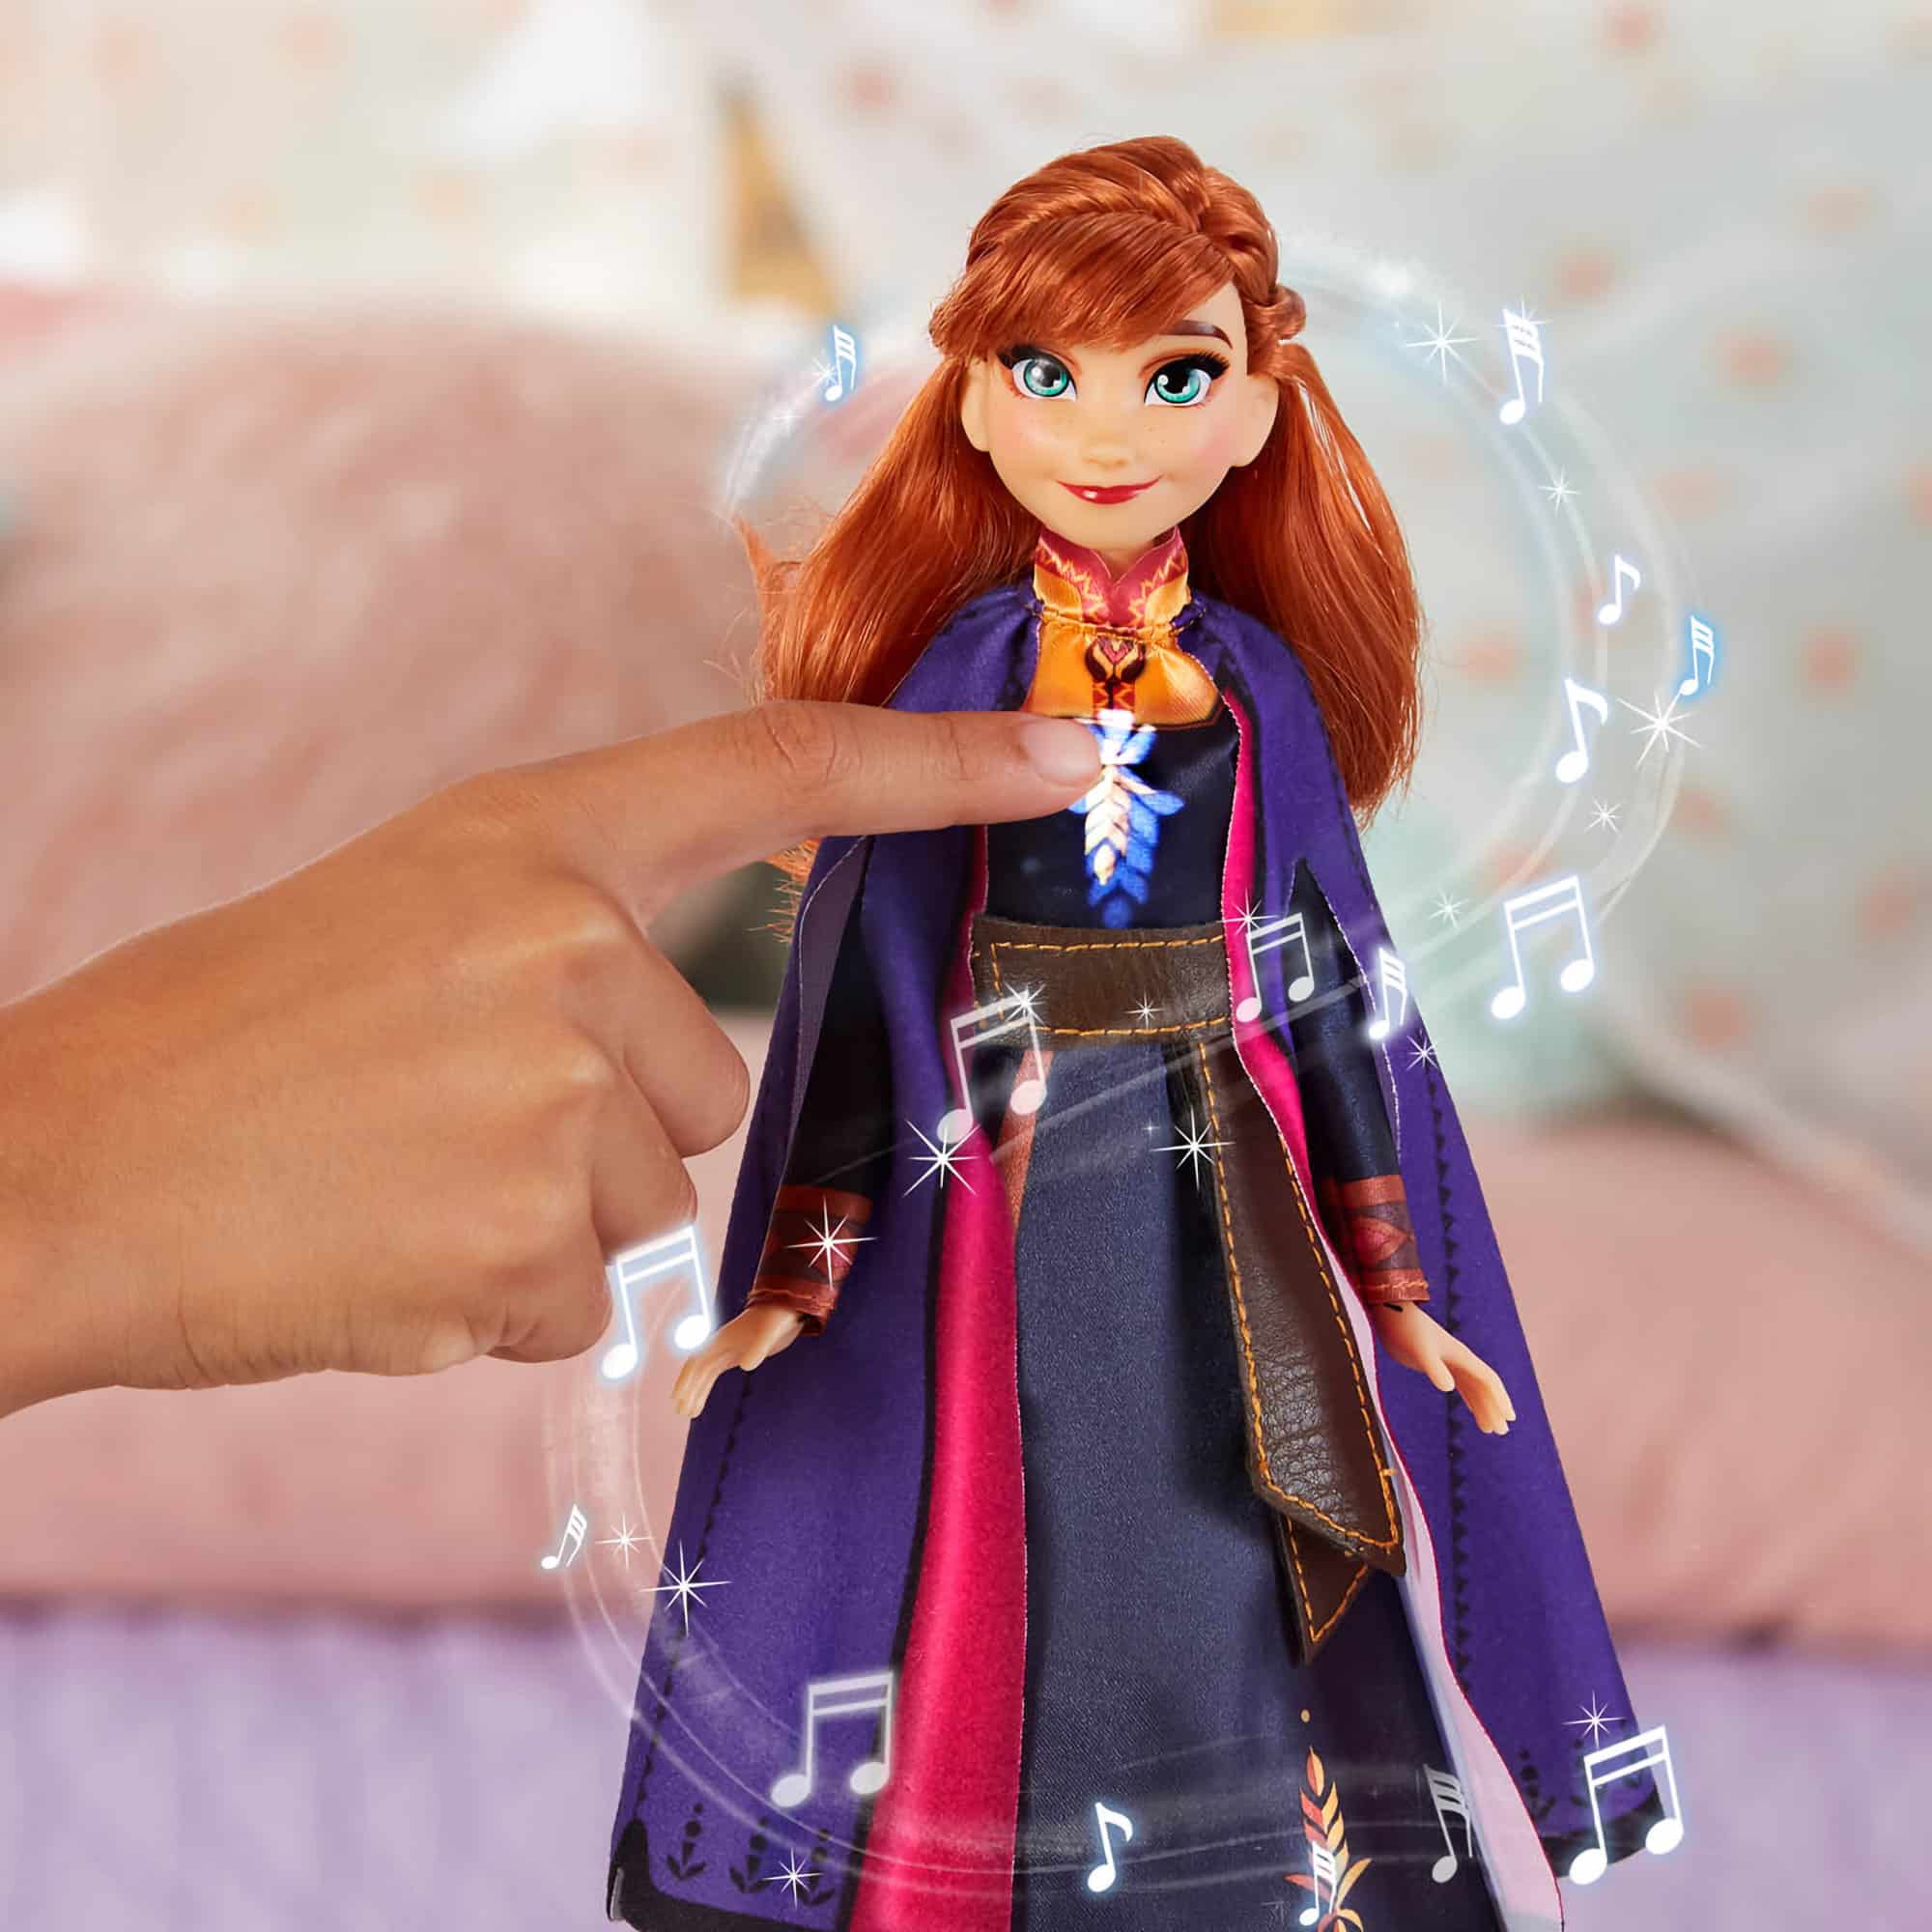 Disney Frozen - Singing Elsa & Anna Doll Assortment